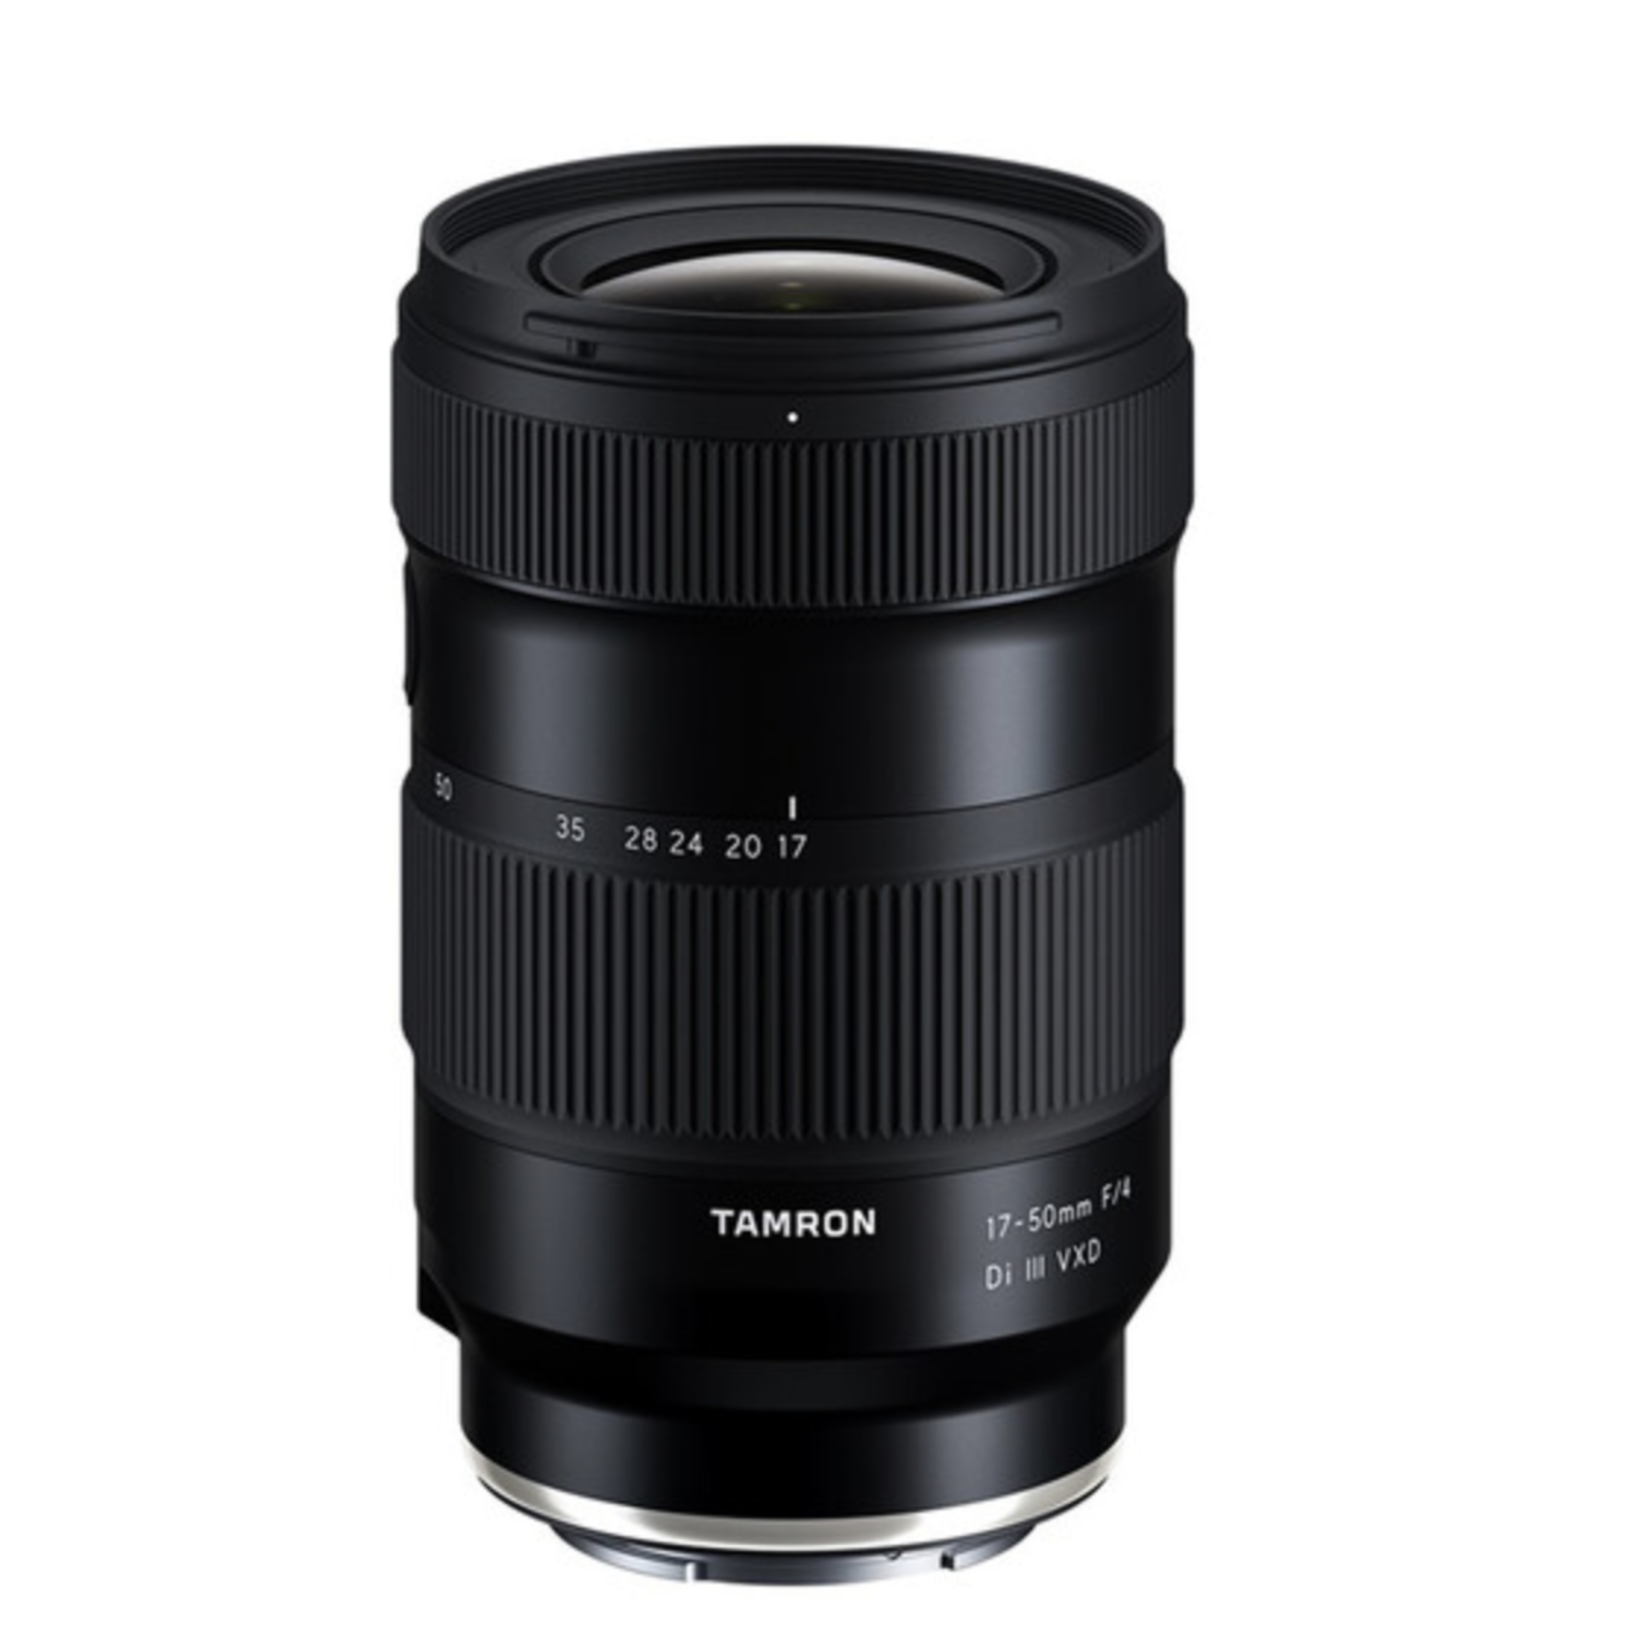 Tamron Tamron 17-50mm f/4 Di III VXD Lens (Sony E)